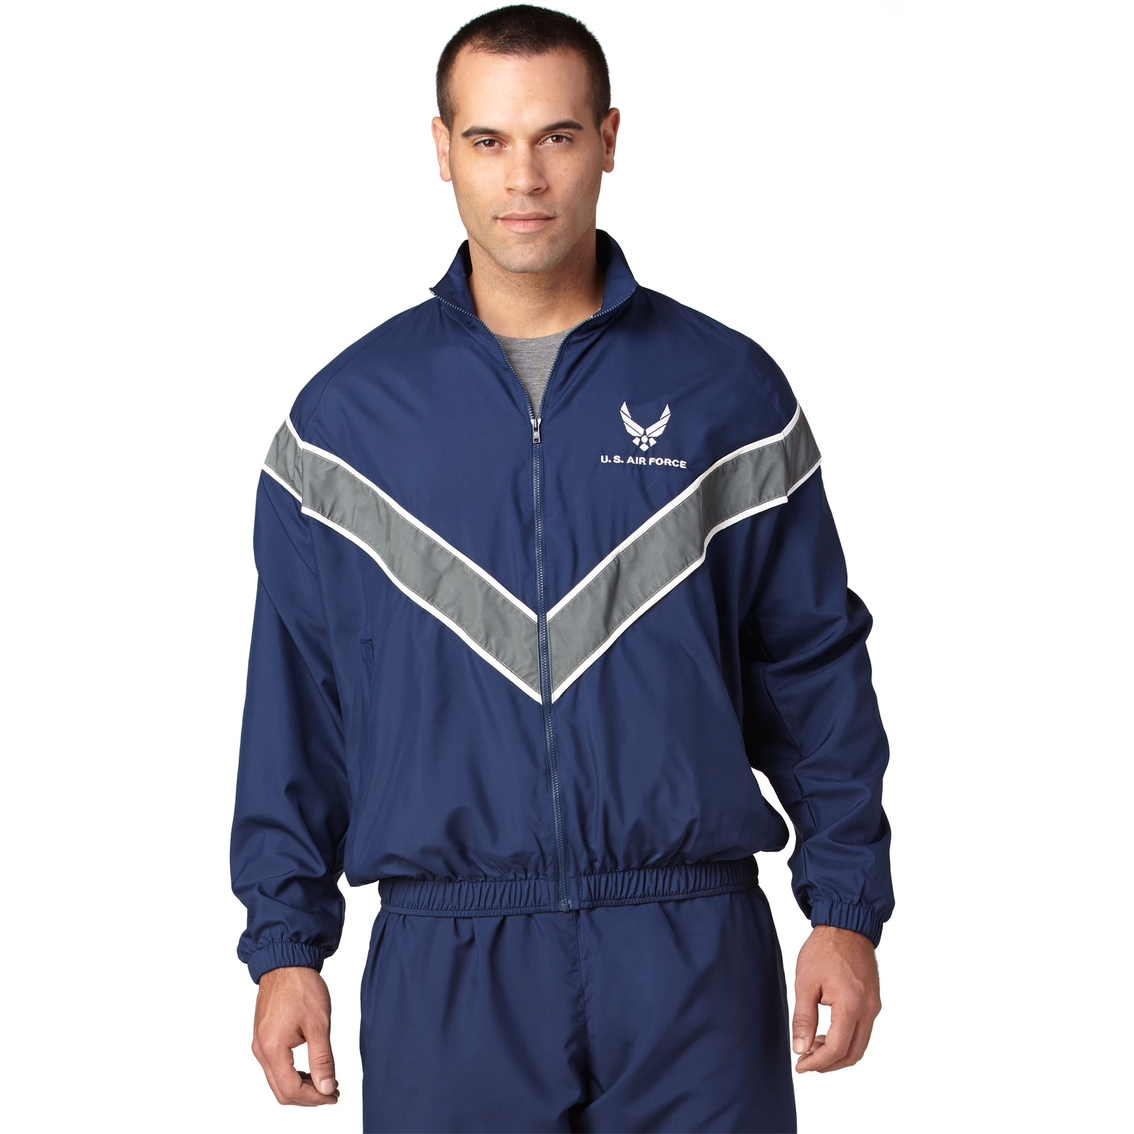 DLATS Air Force IPTU Running Suit Jacket